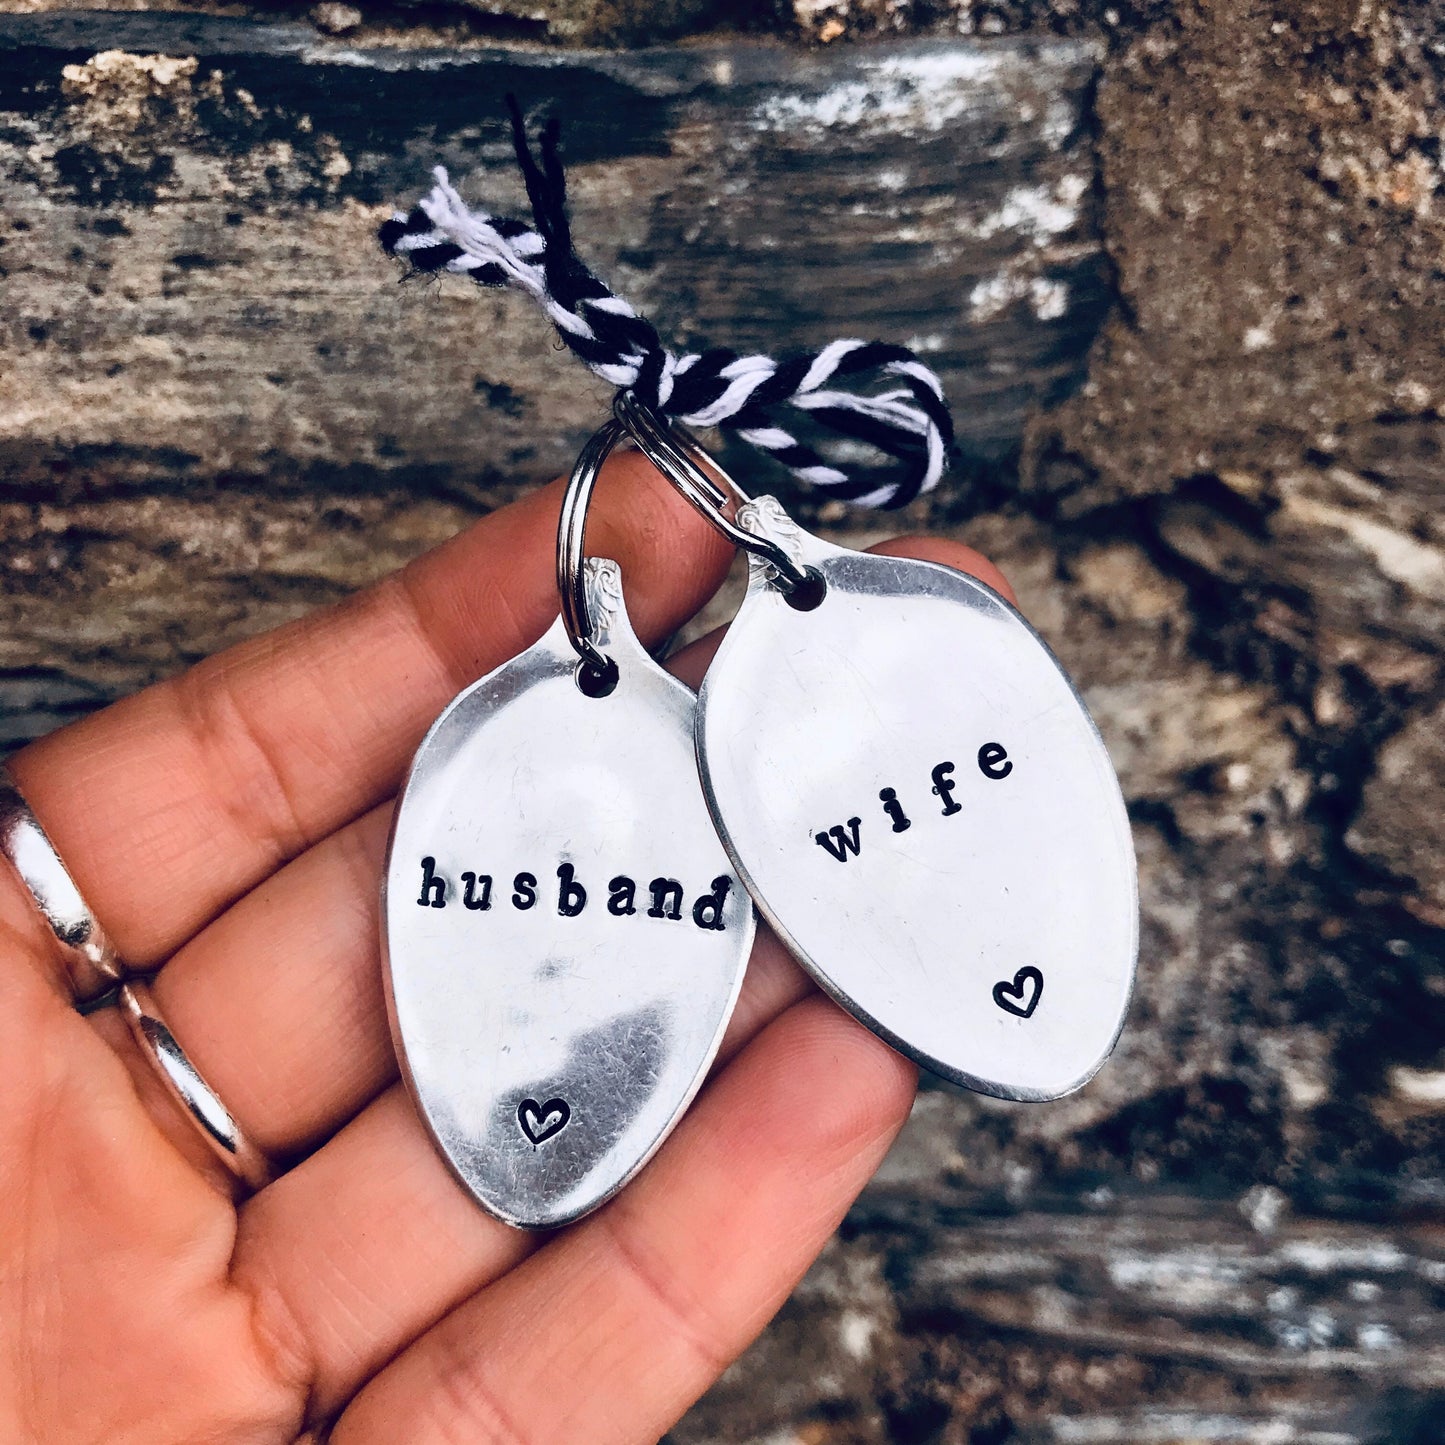 Wife, Husband - Vintage Spoon Key Ring Set